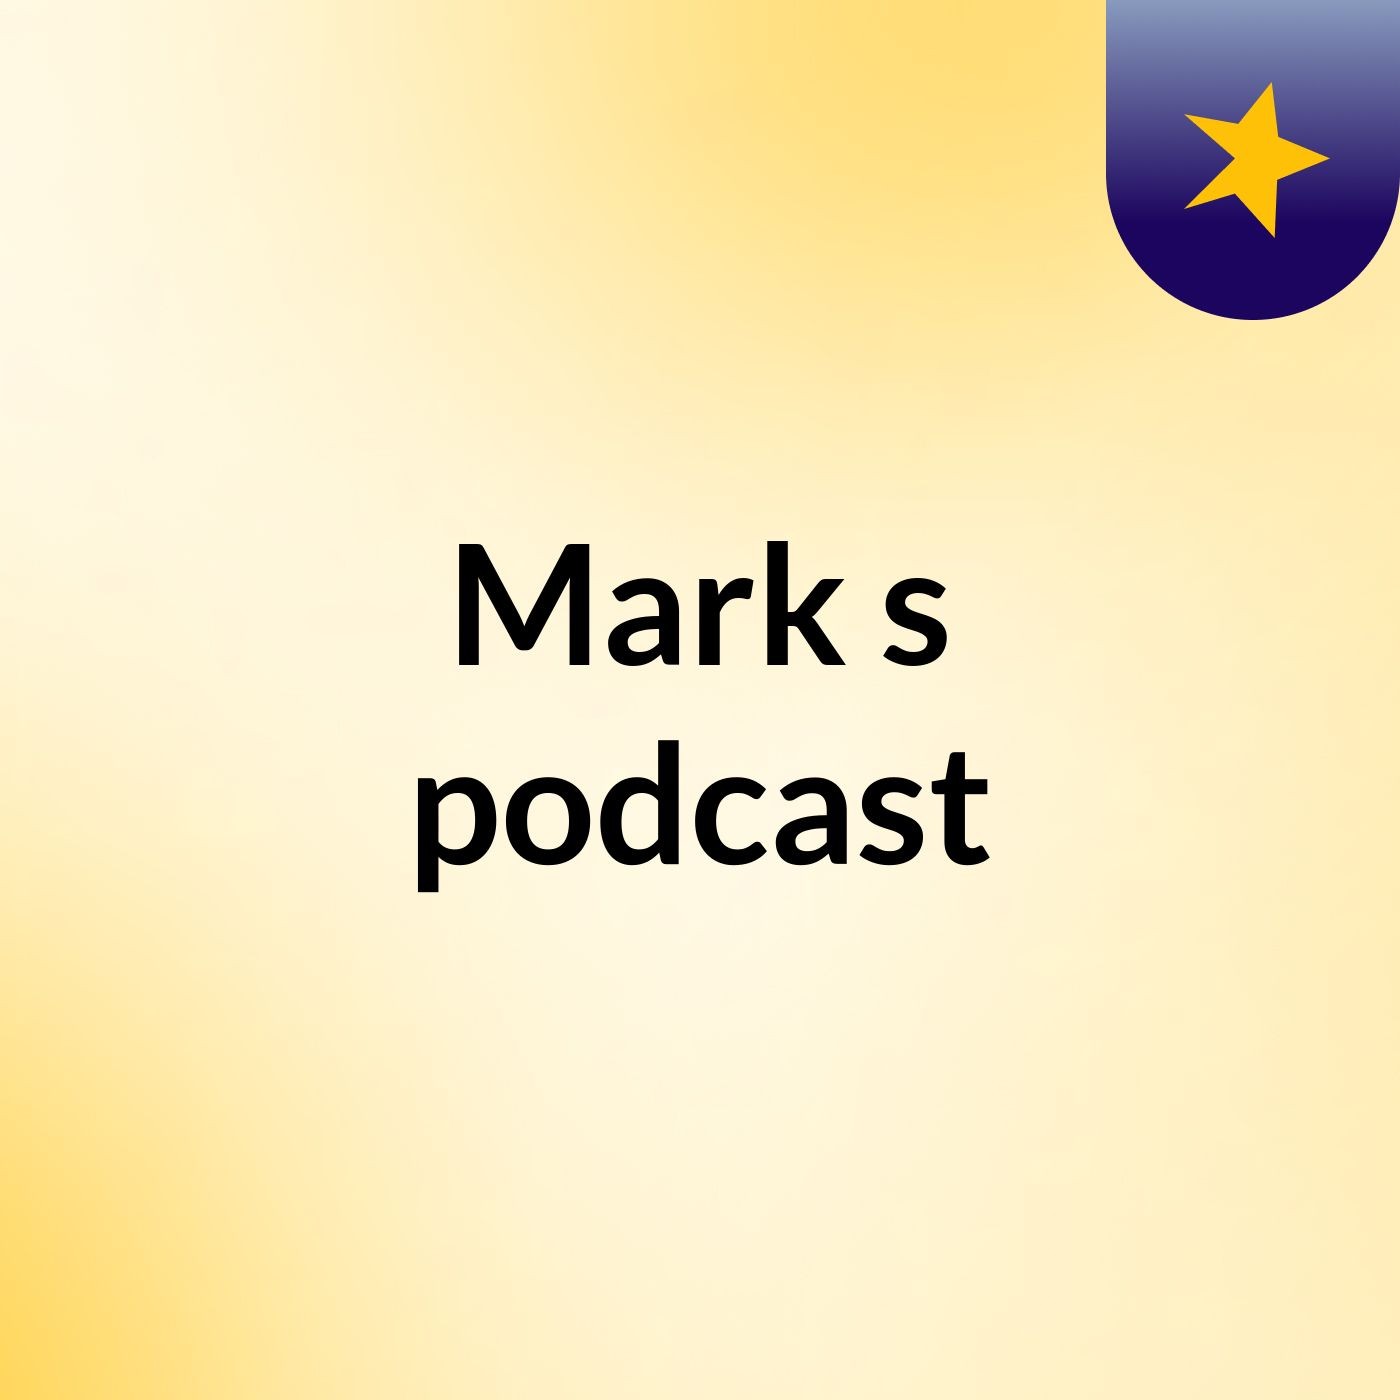 Episode 7 - Mark's podcast